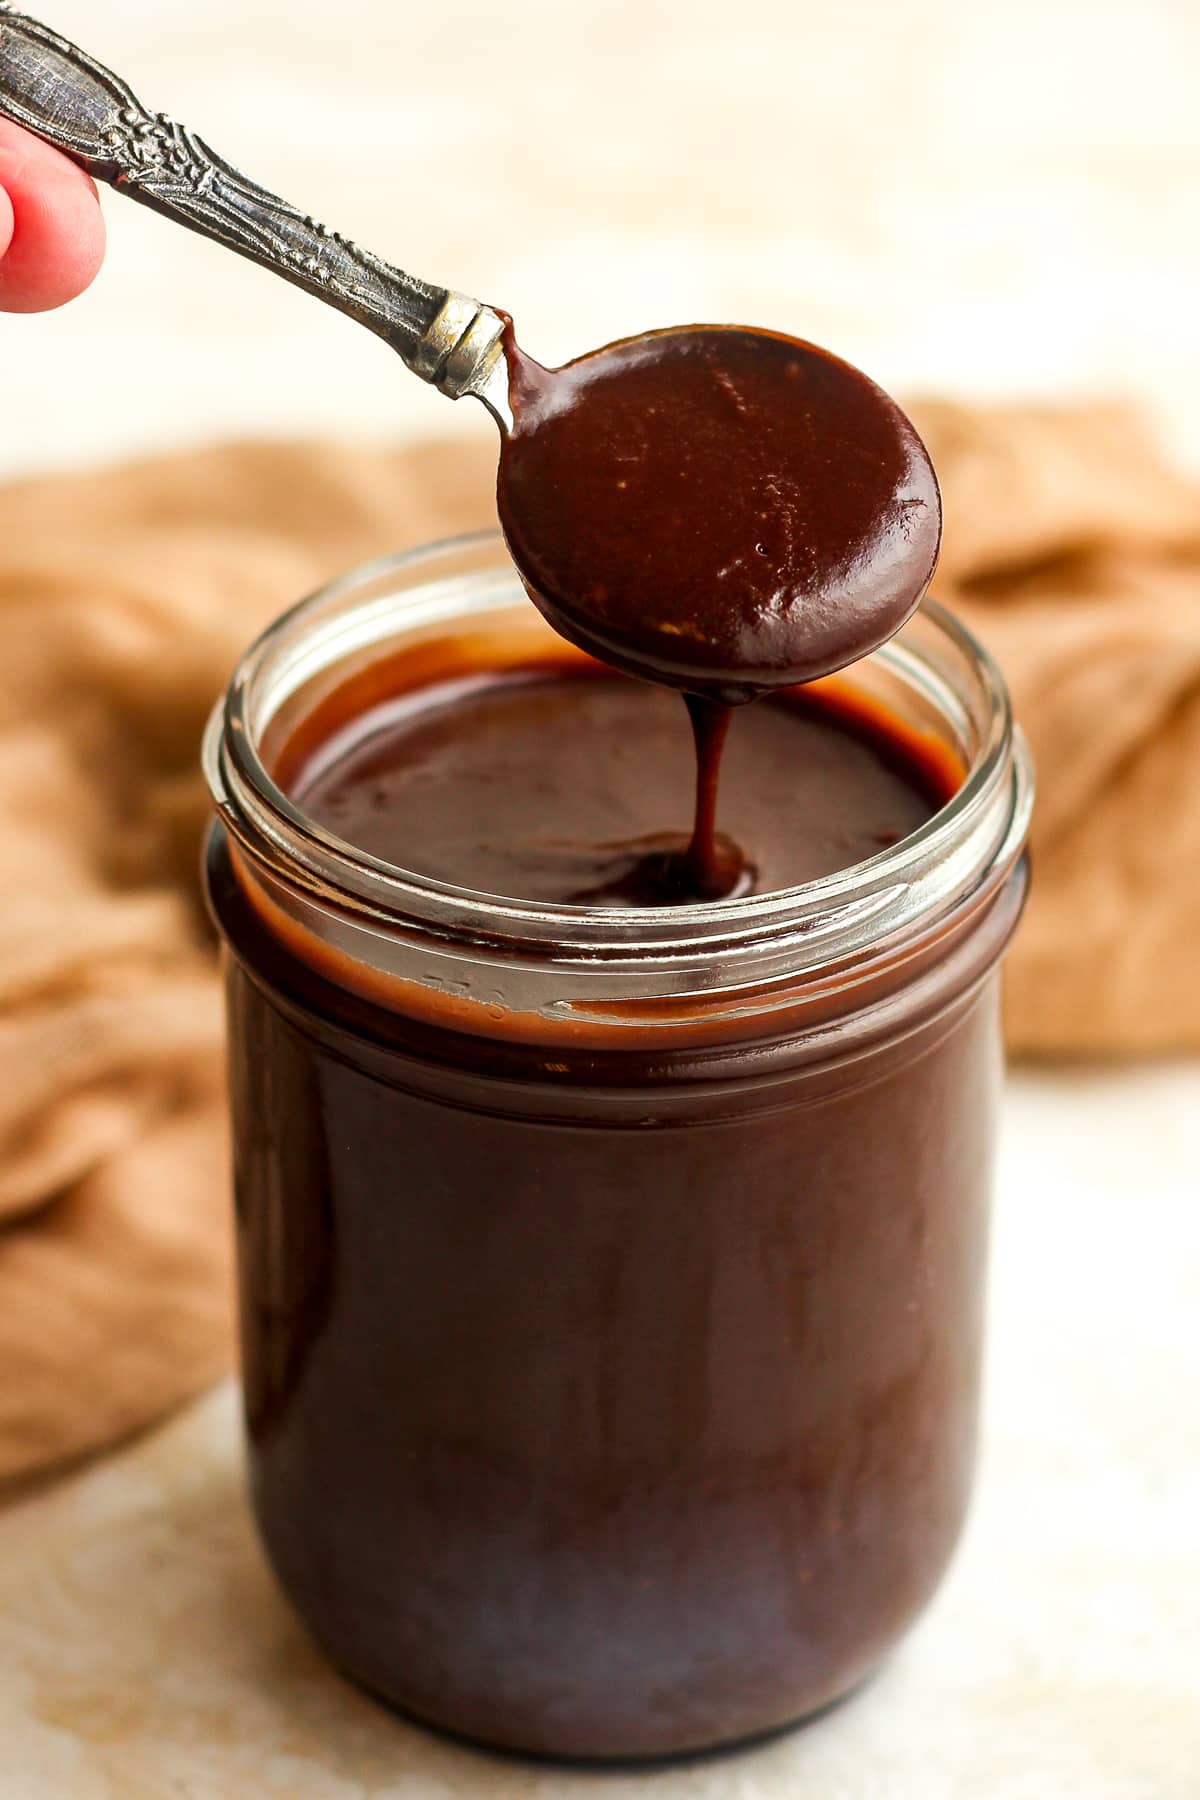 A spoonful of hot fudge sauce above a full jar.